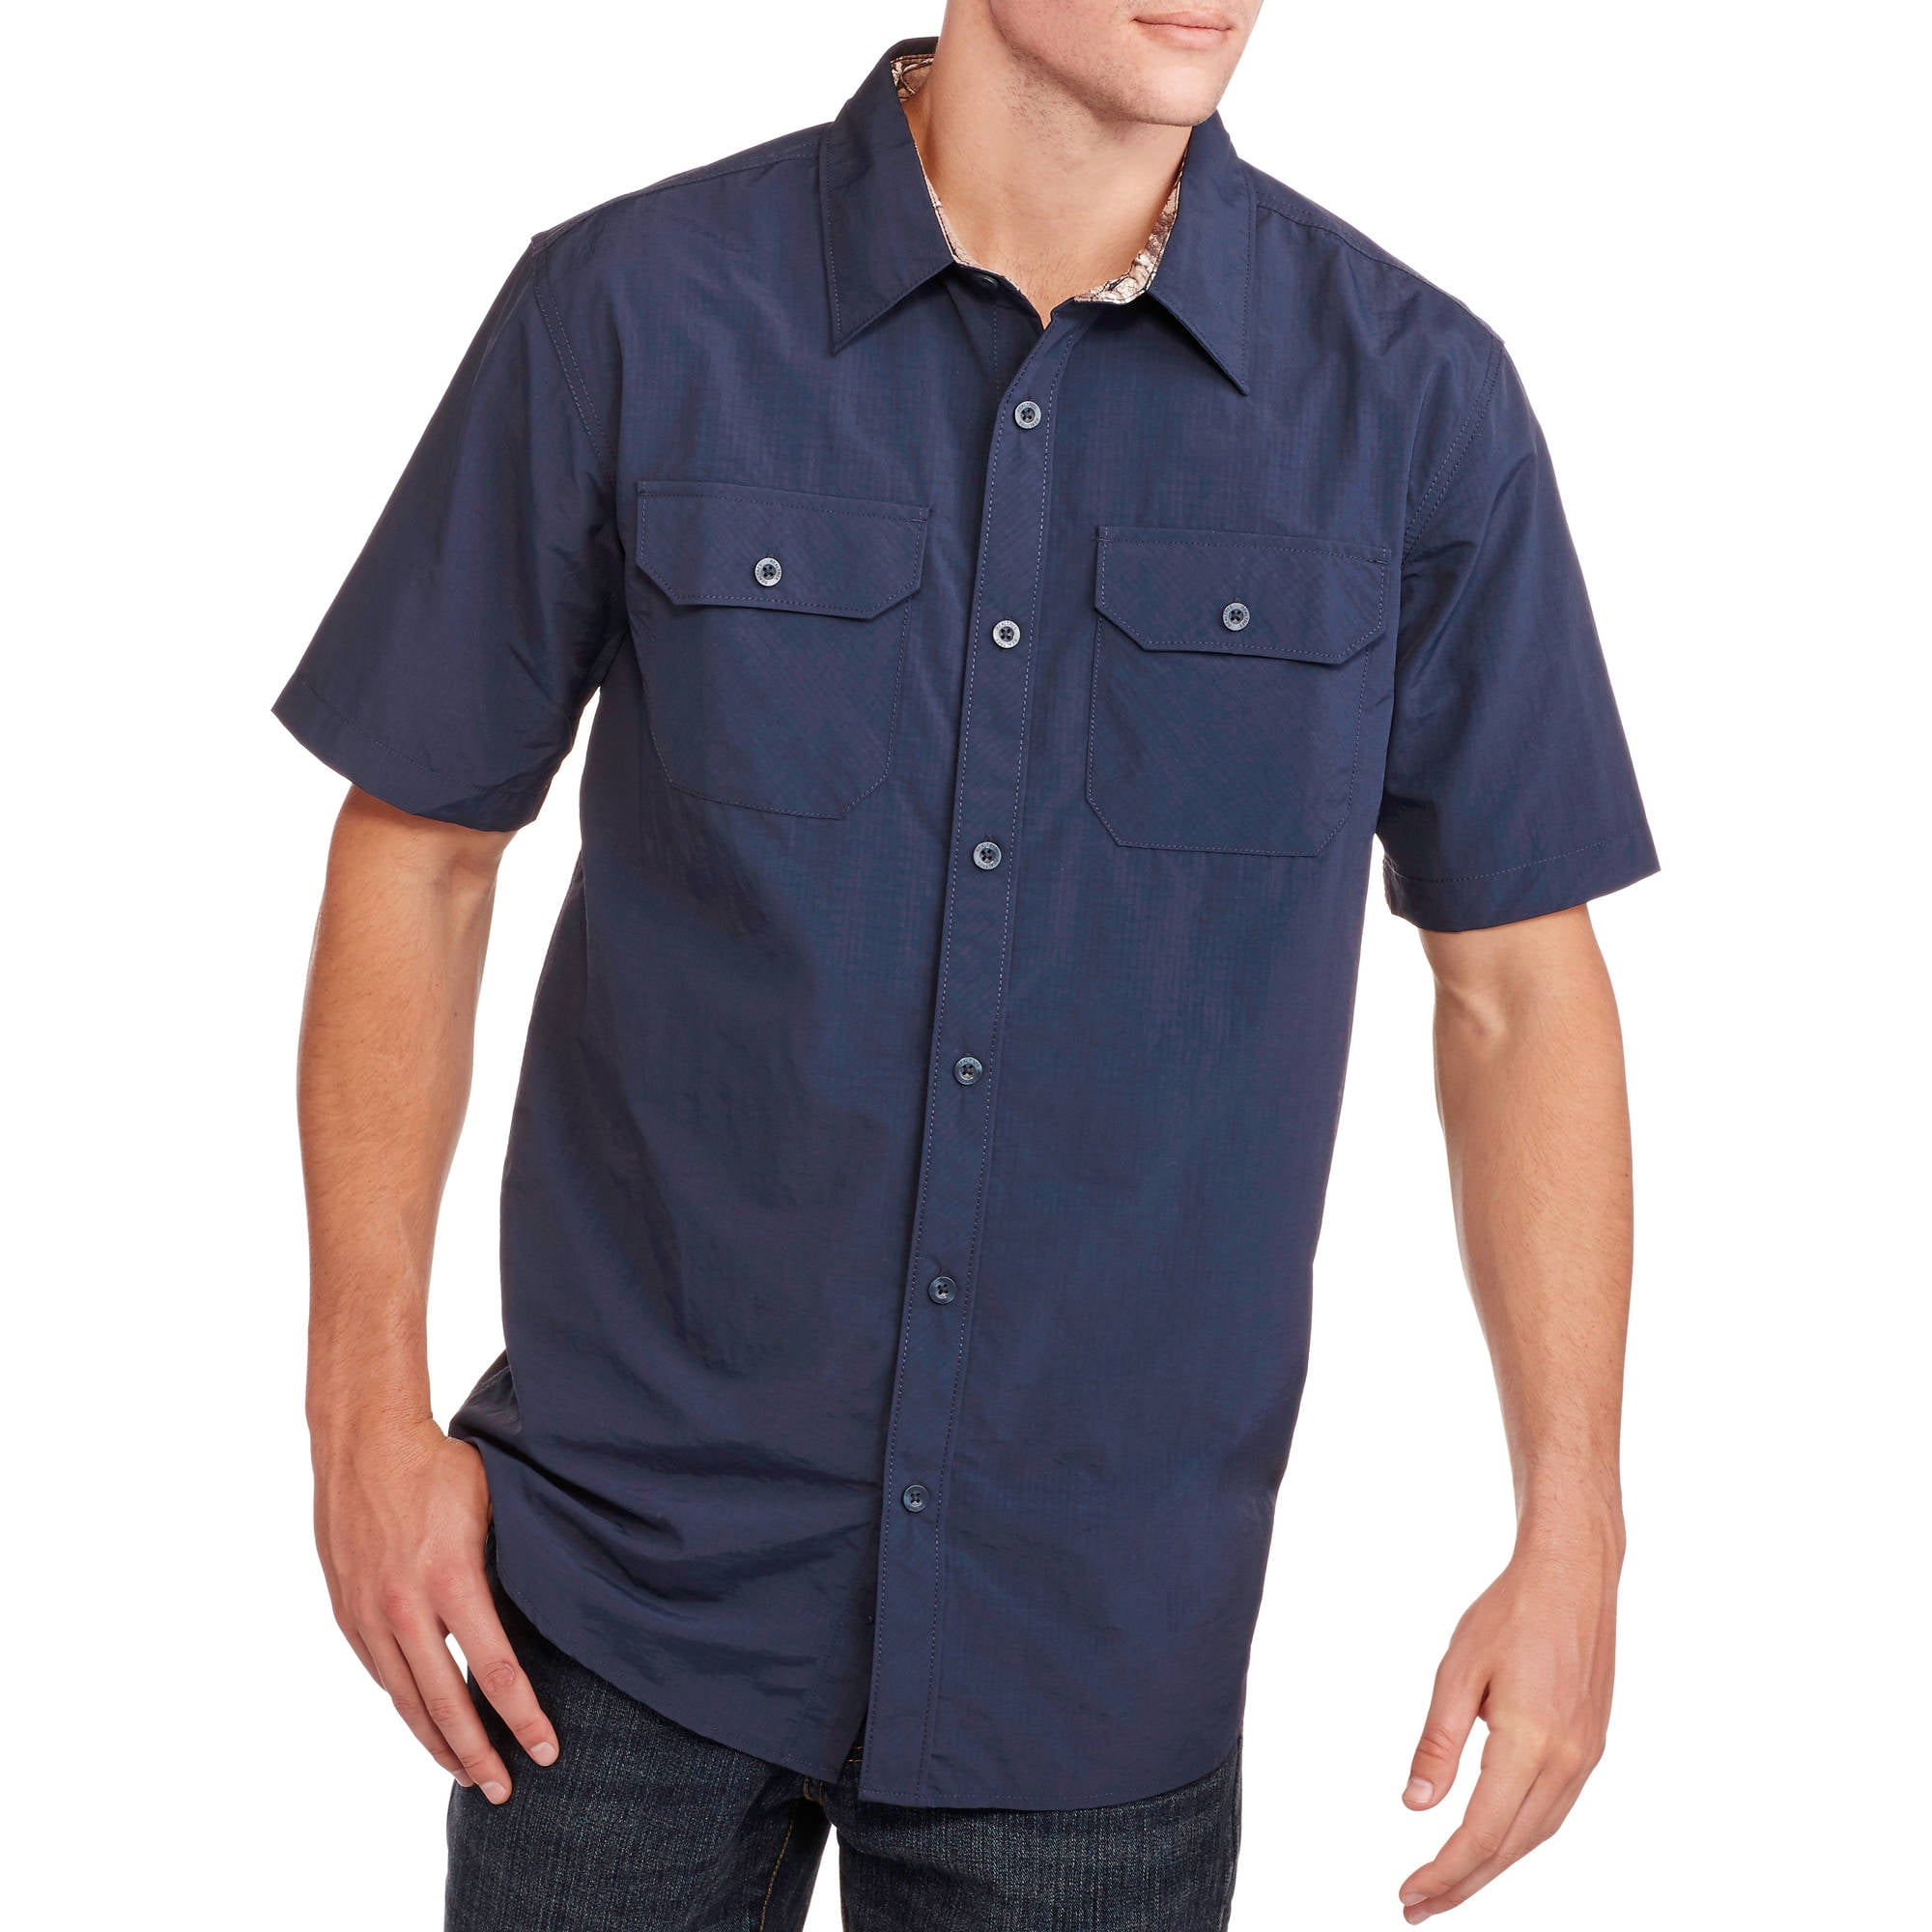 Realtree - Men's Performance Short Sleeve Woven Shirt - Walmart.com ...